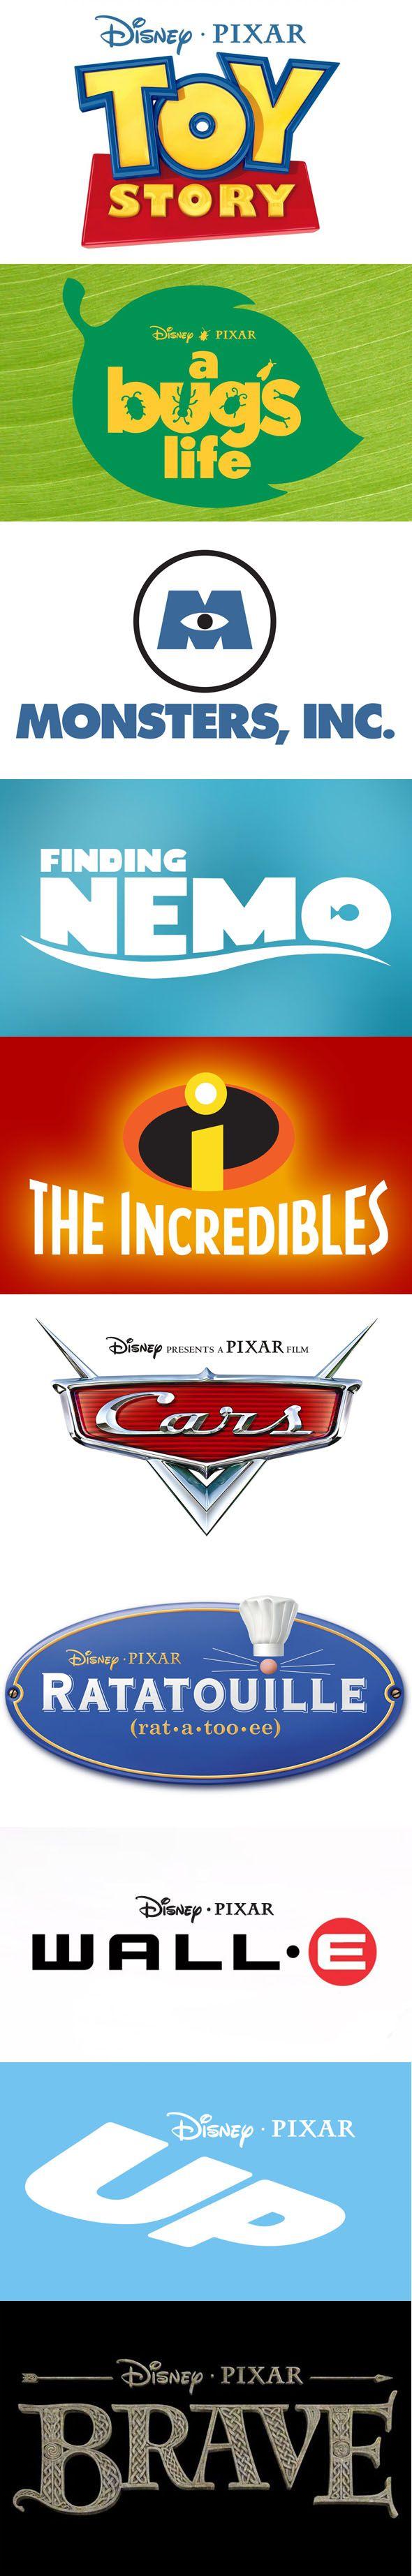 Disney Pixar Films Logo - Pixar Logos | Just Because You Have a Fast Pass...Doesn't Mean You ...